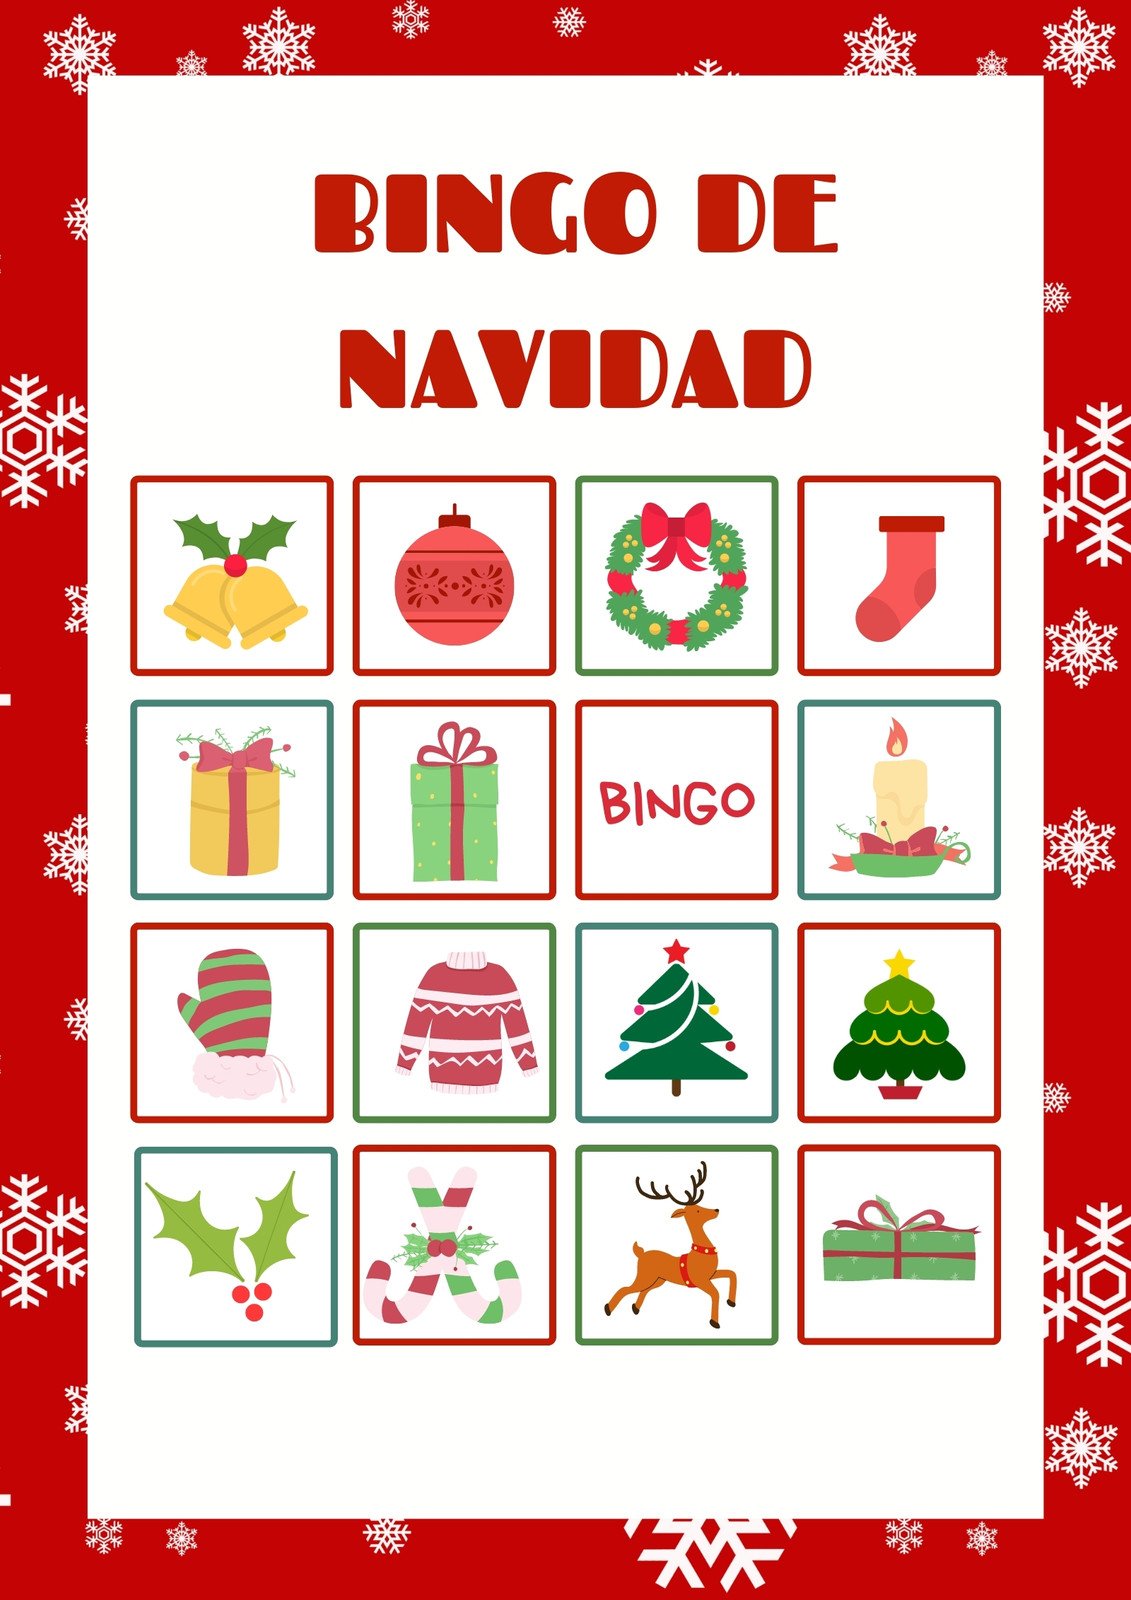 Bingo para cena infantil / Bingo para niños / Cena con actividades /  Actividades familiares / Bingo familiar / Diversión familiar / Actividades  para niños -  España